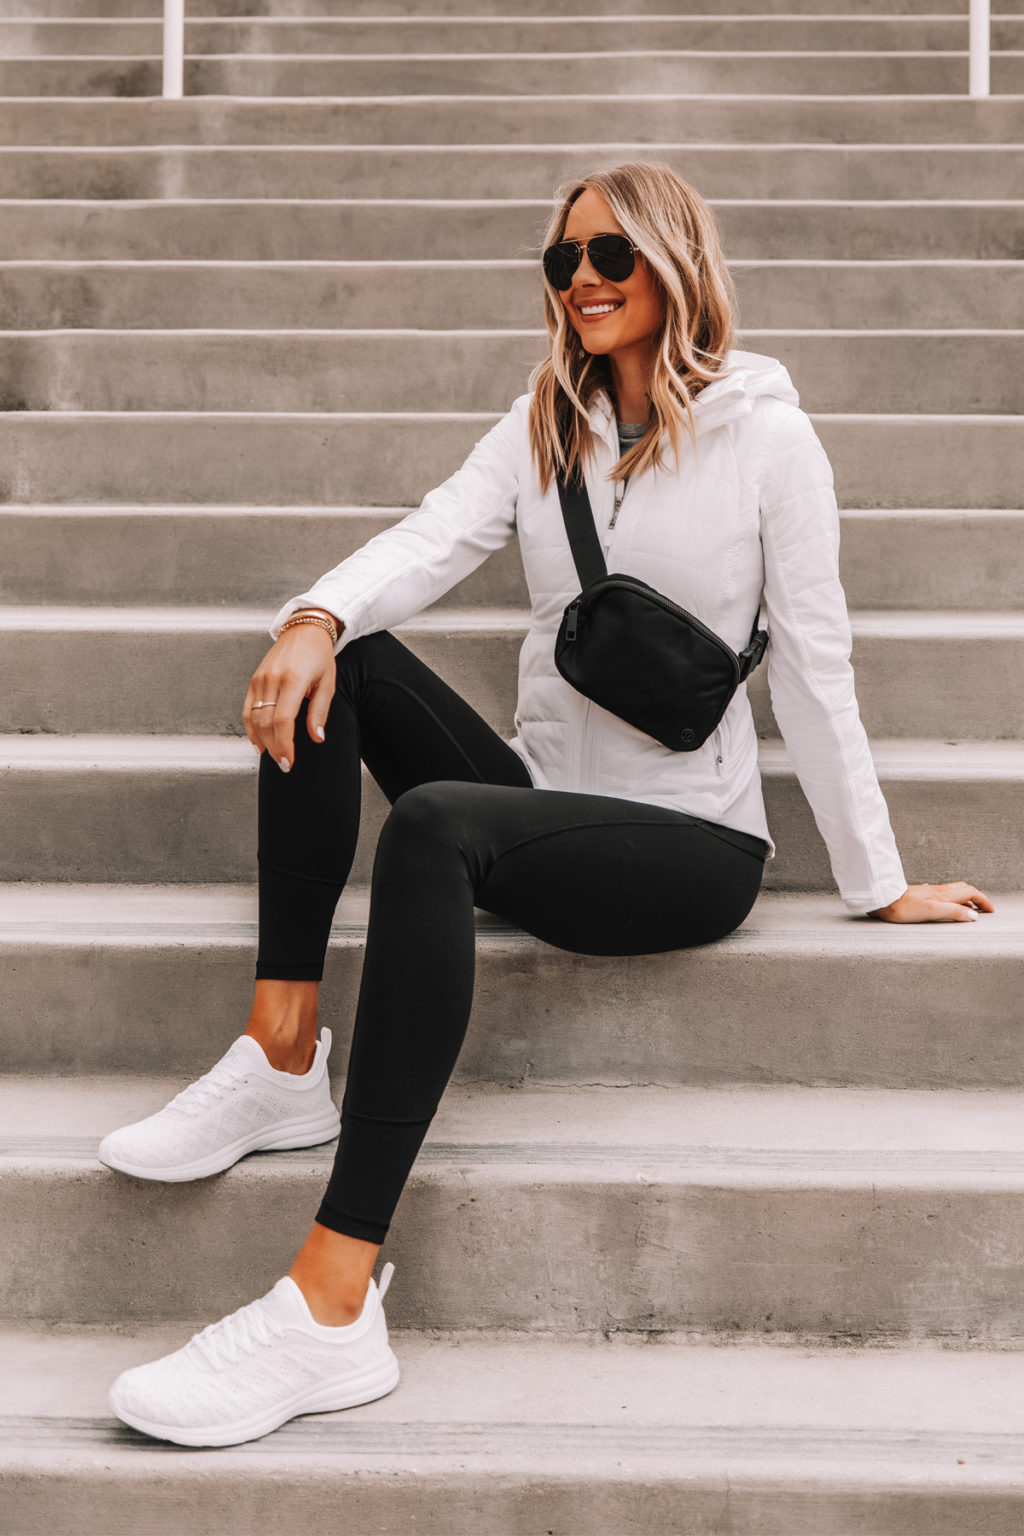 https://fashionjackson.com/wp-content/uploads/2020/03/Fashion-Jackson-Wearing-lululemon-White-Jacket-Black-Leggngs-White-Sneakers-Workout-Outfit-1-1024x1536.jpg